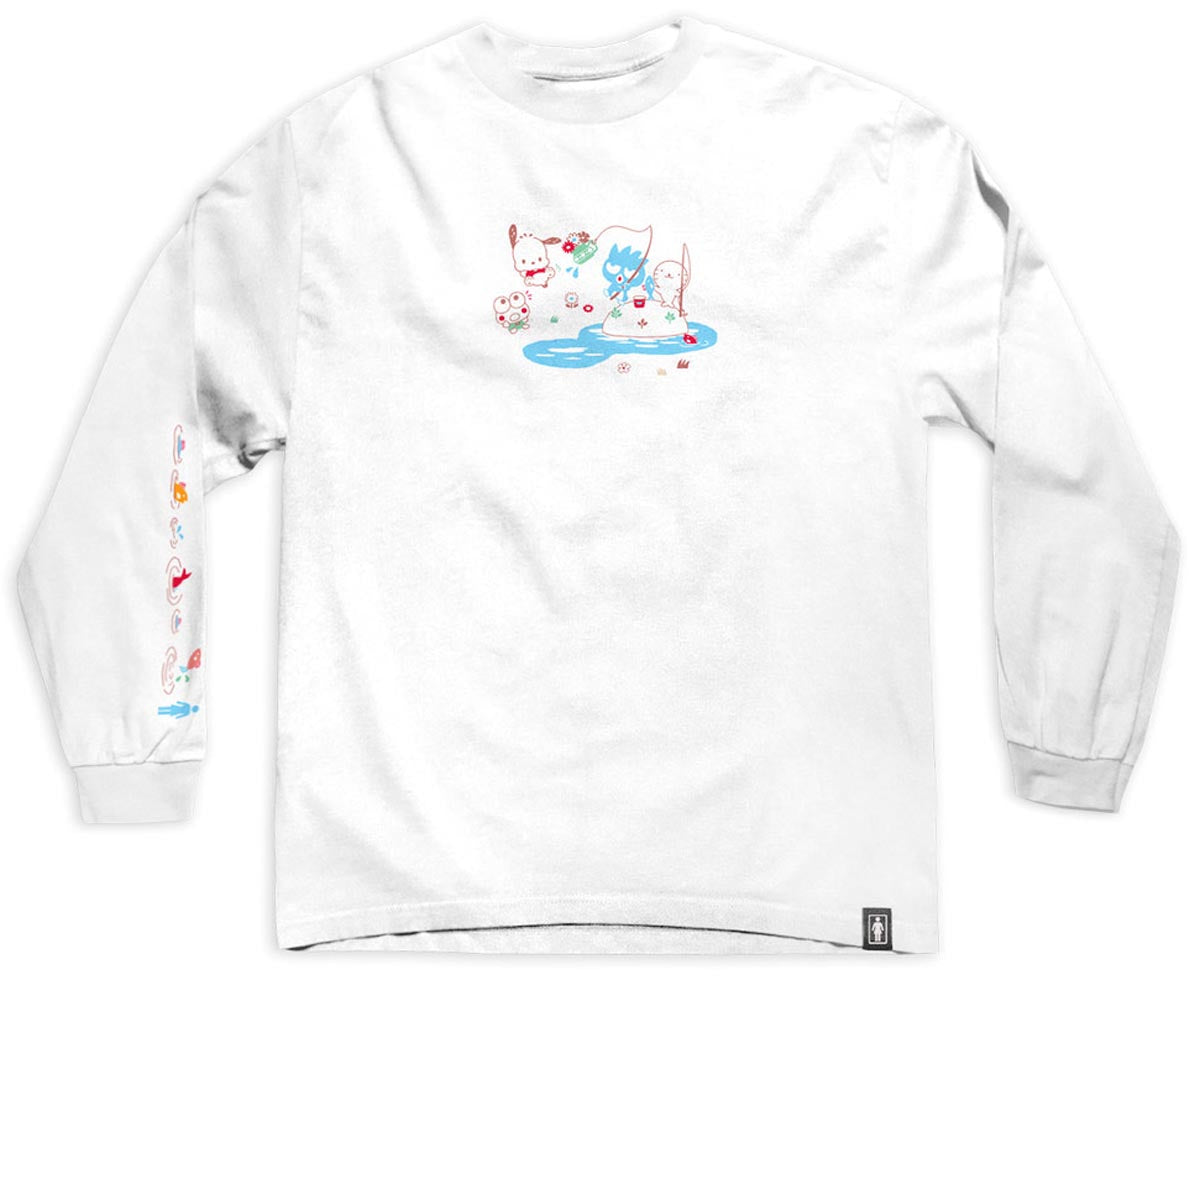 Girl x Hello Kitty Fishing Long Sleeve T-Shirt - White image 1